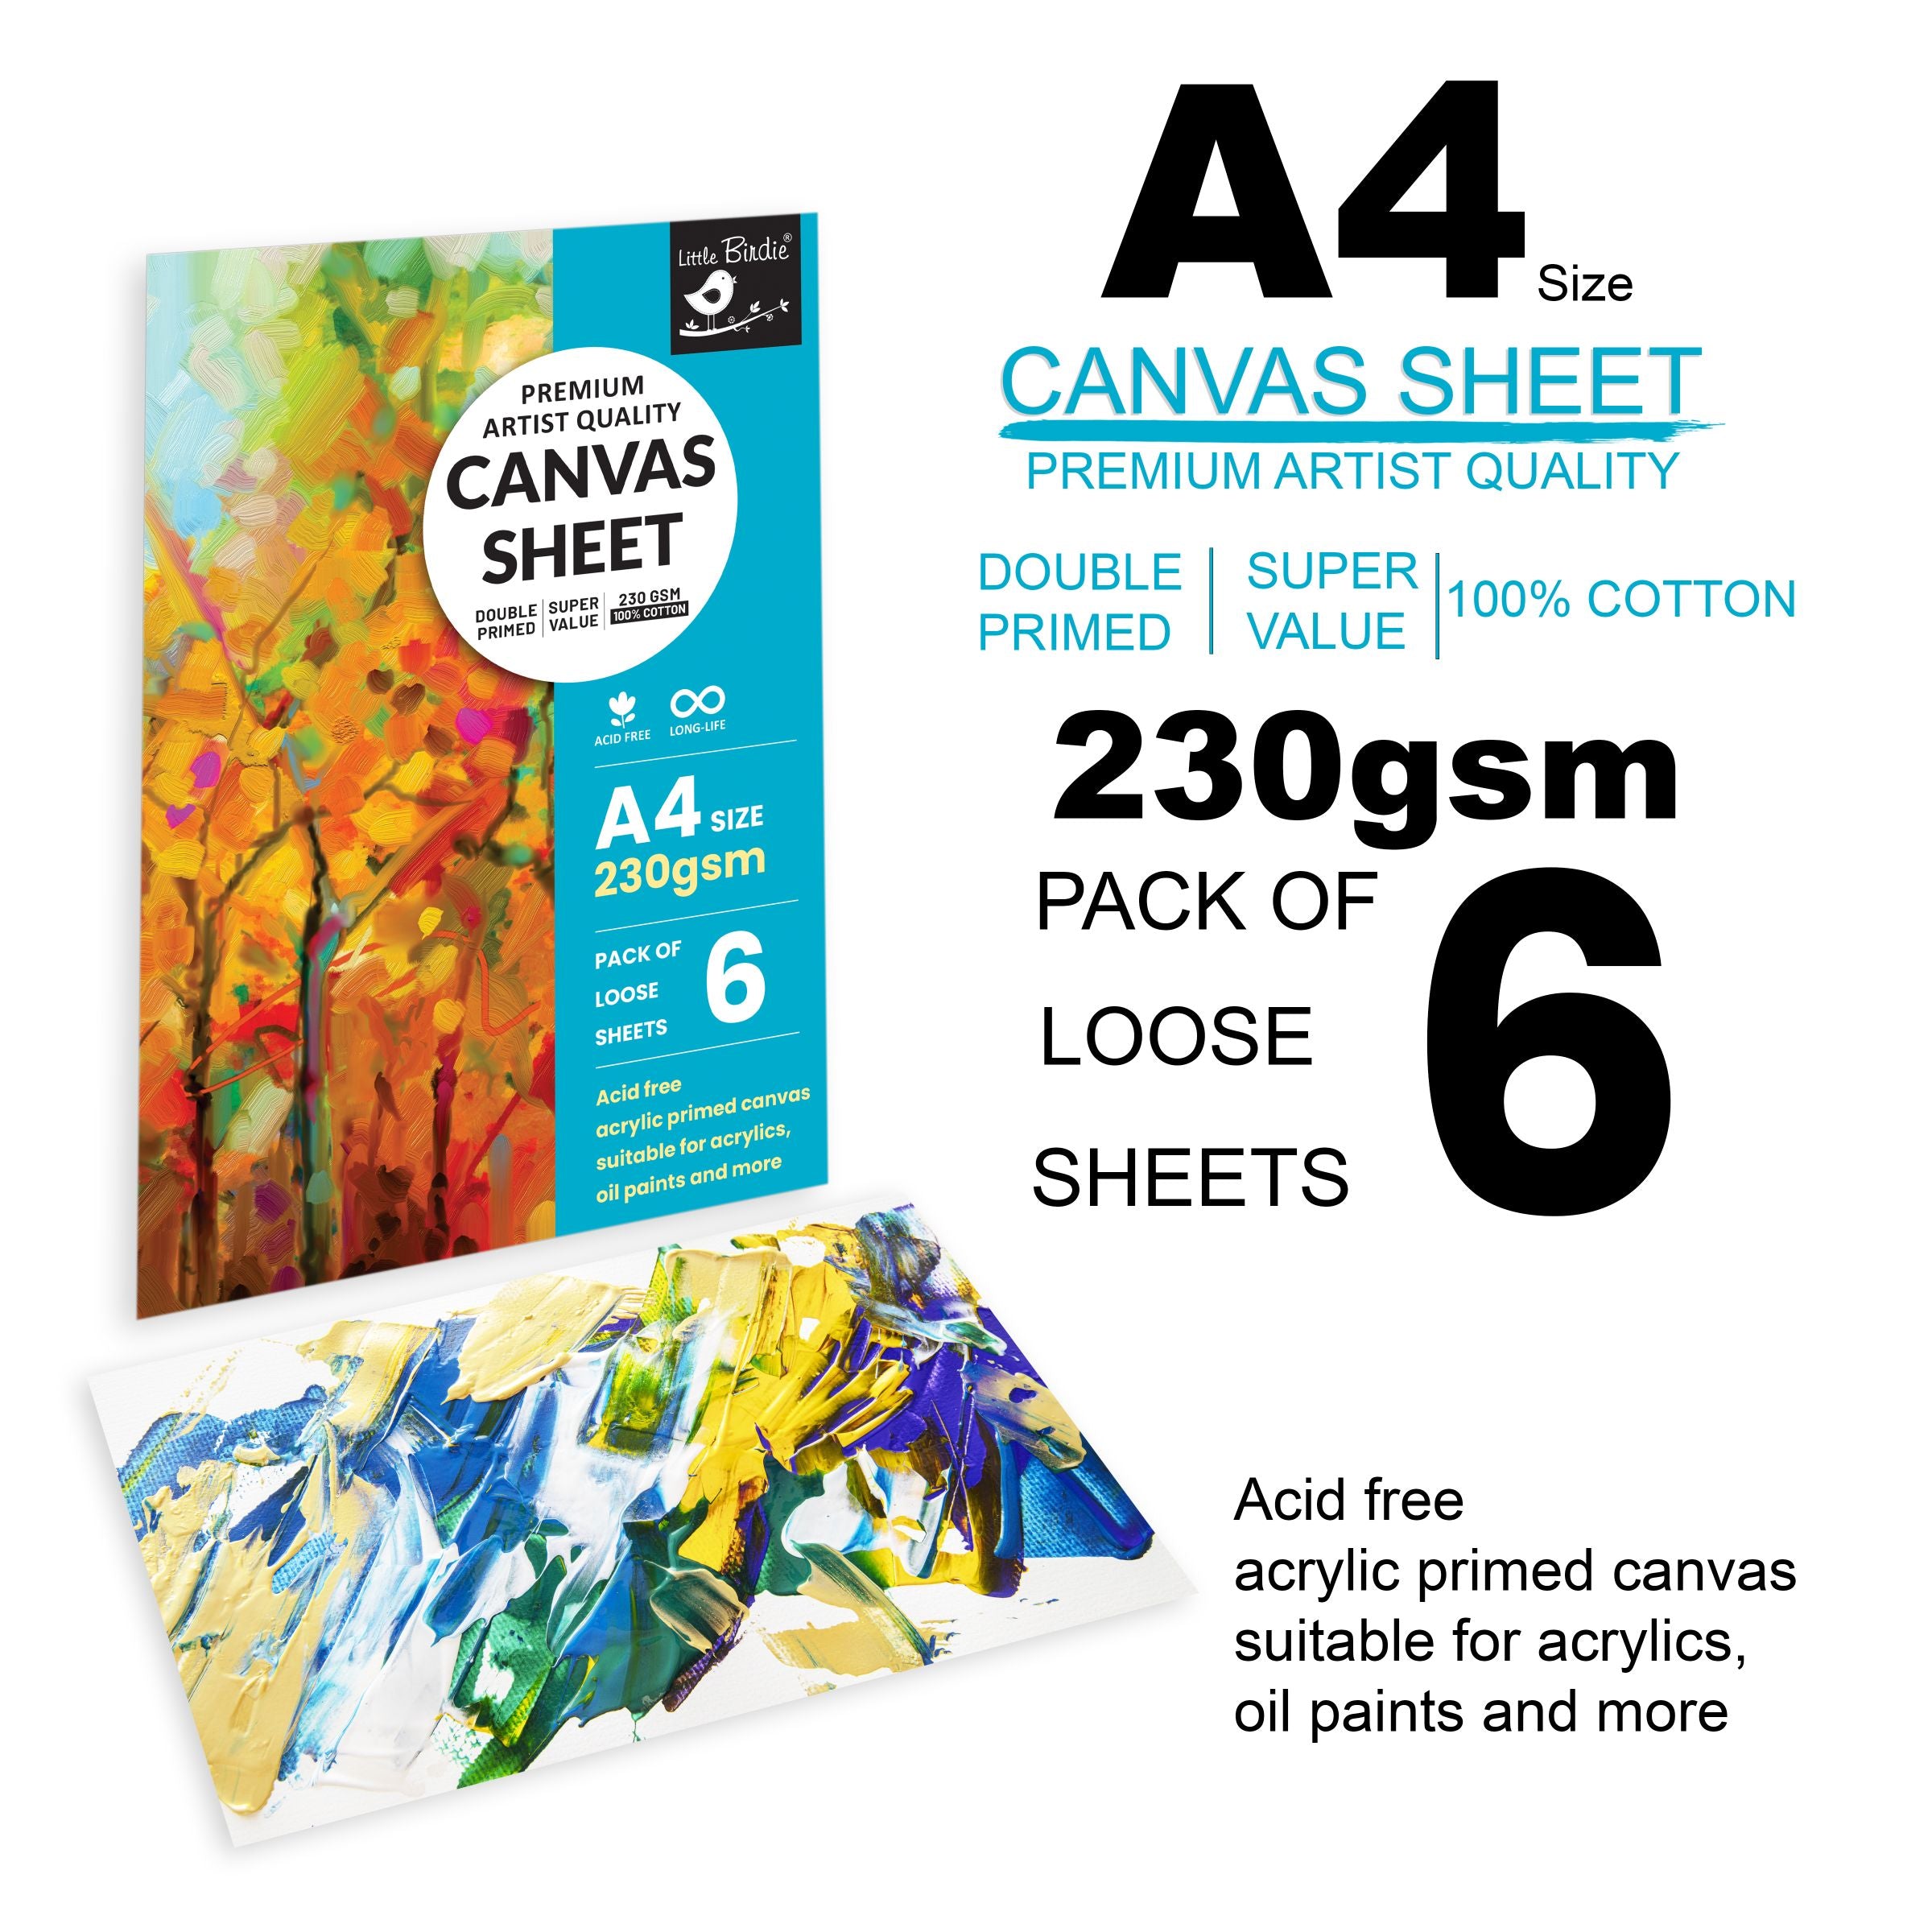 Premium Artist Canvas Sheets A4 Size 230 Gsm Pack Of 6 Sheets Pb Lb